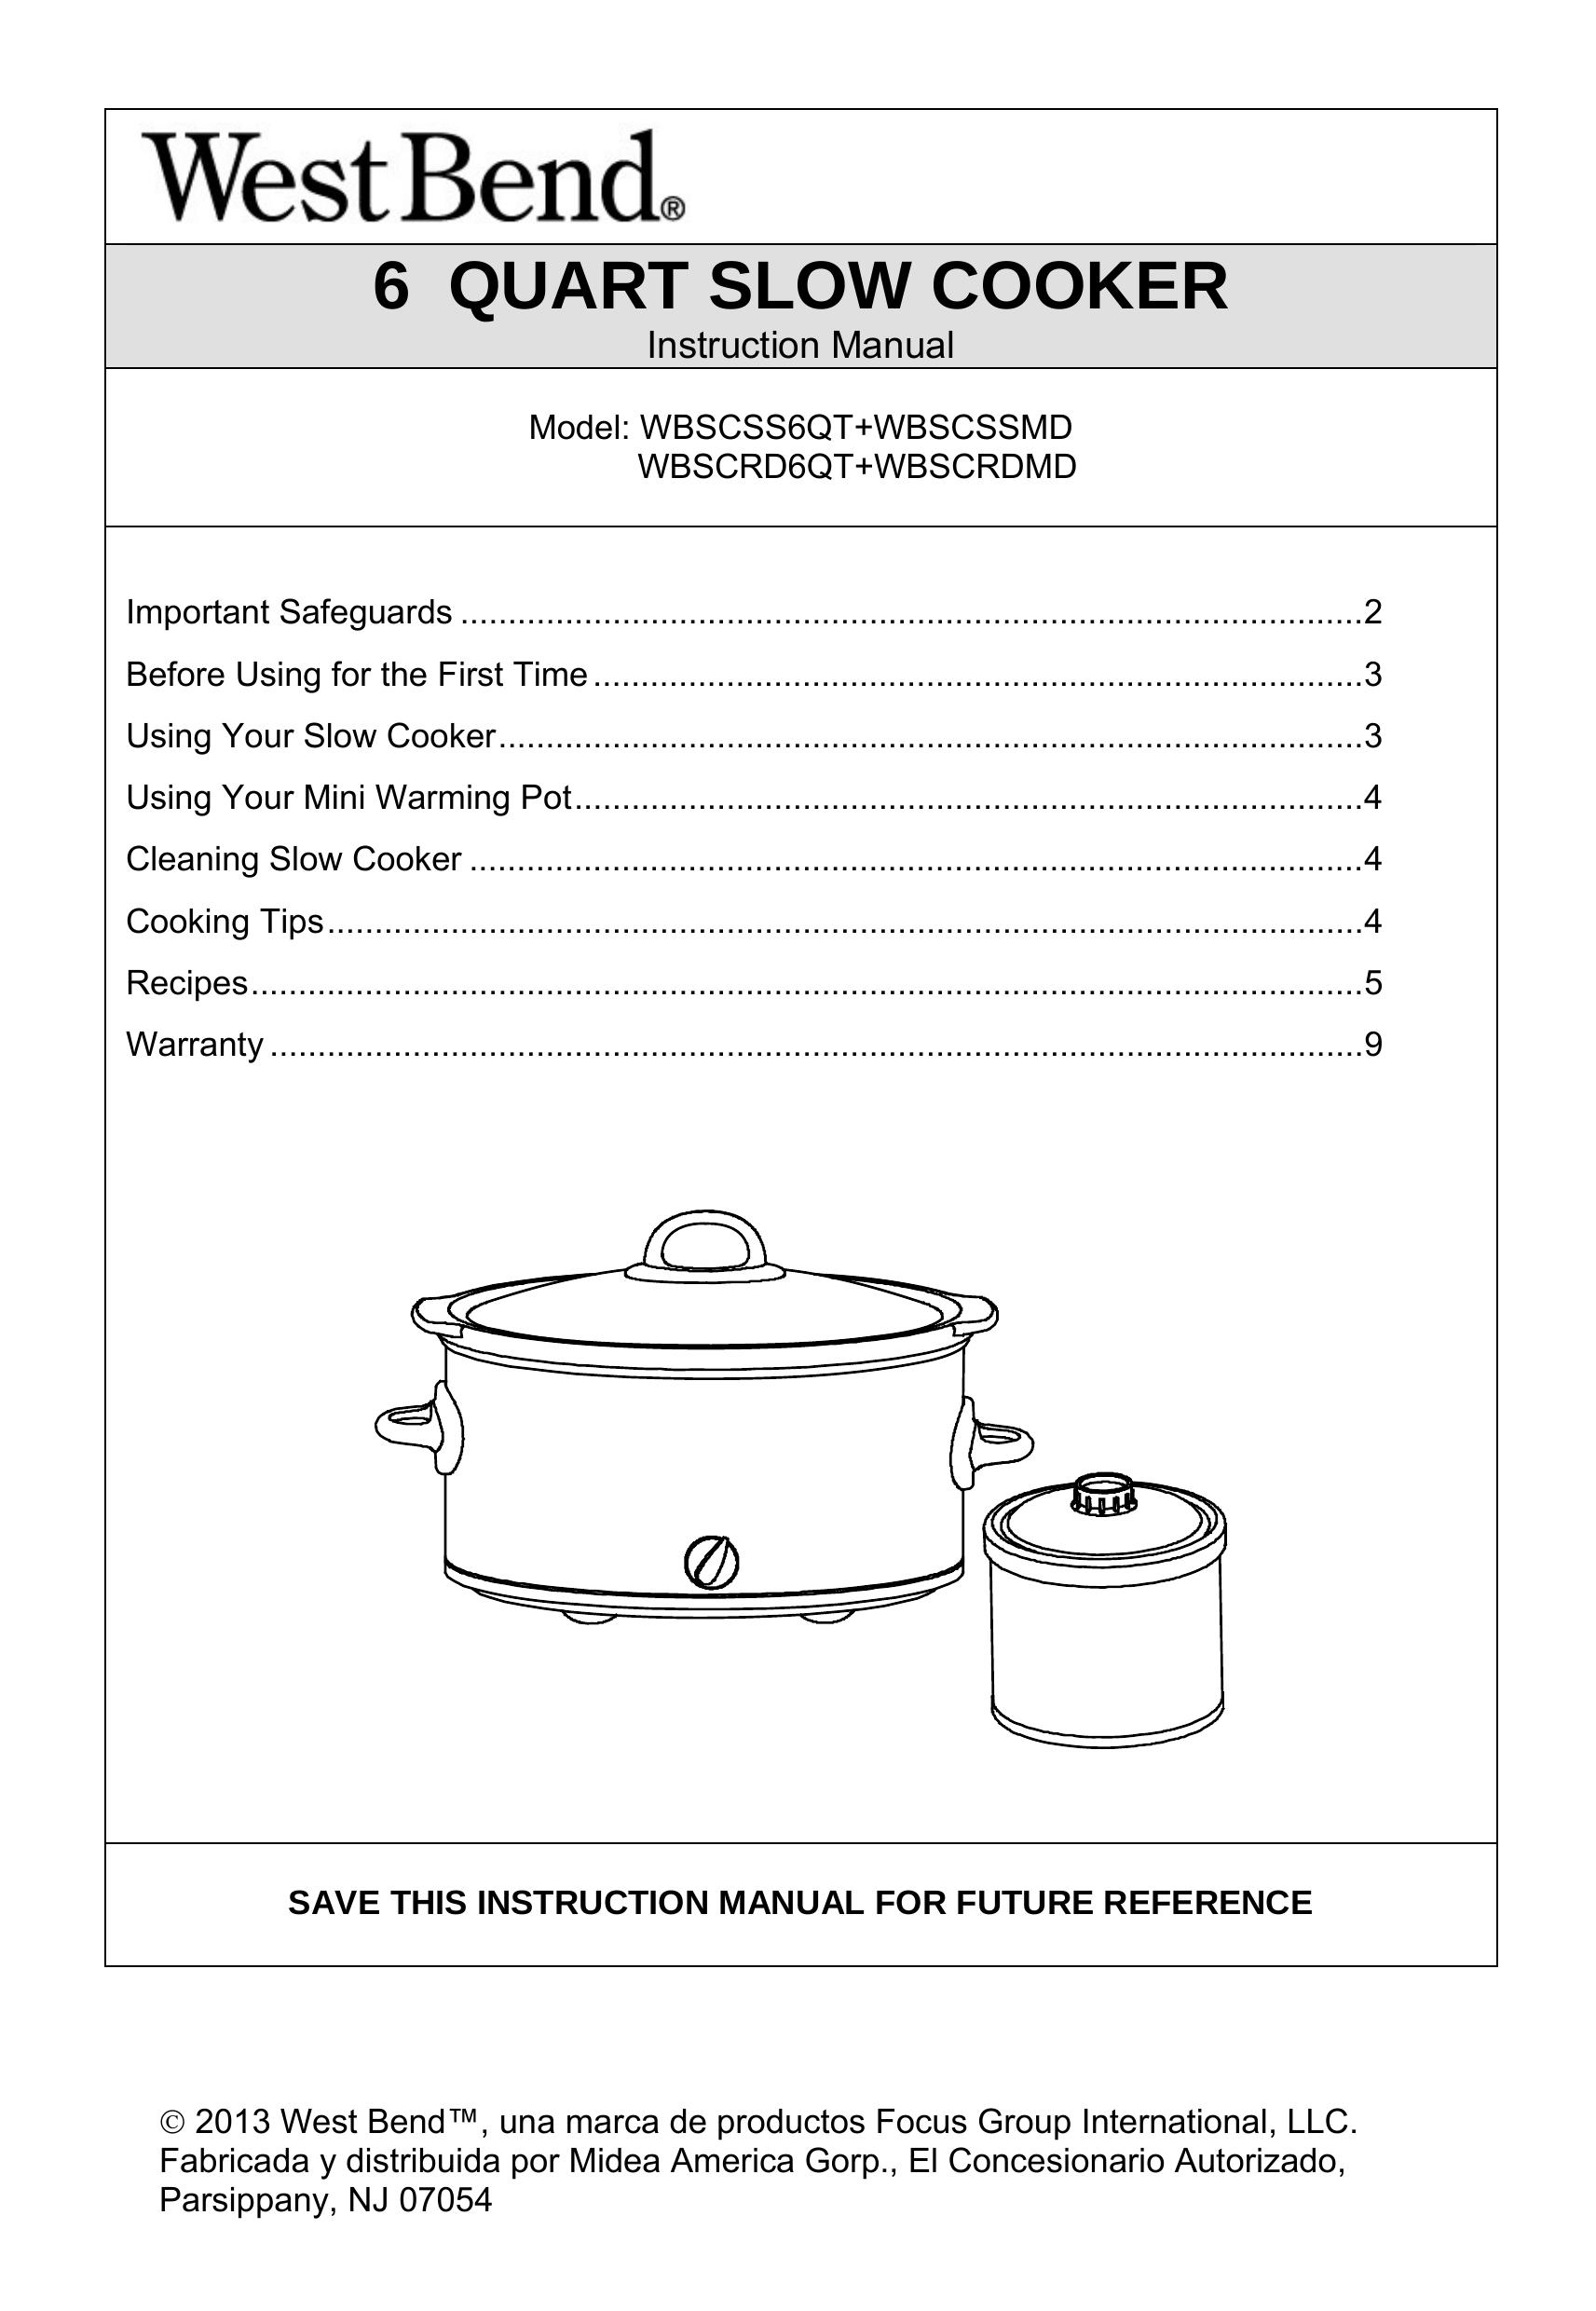 West Bend WBSCRDMD Slow Cooker User Manual